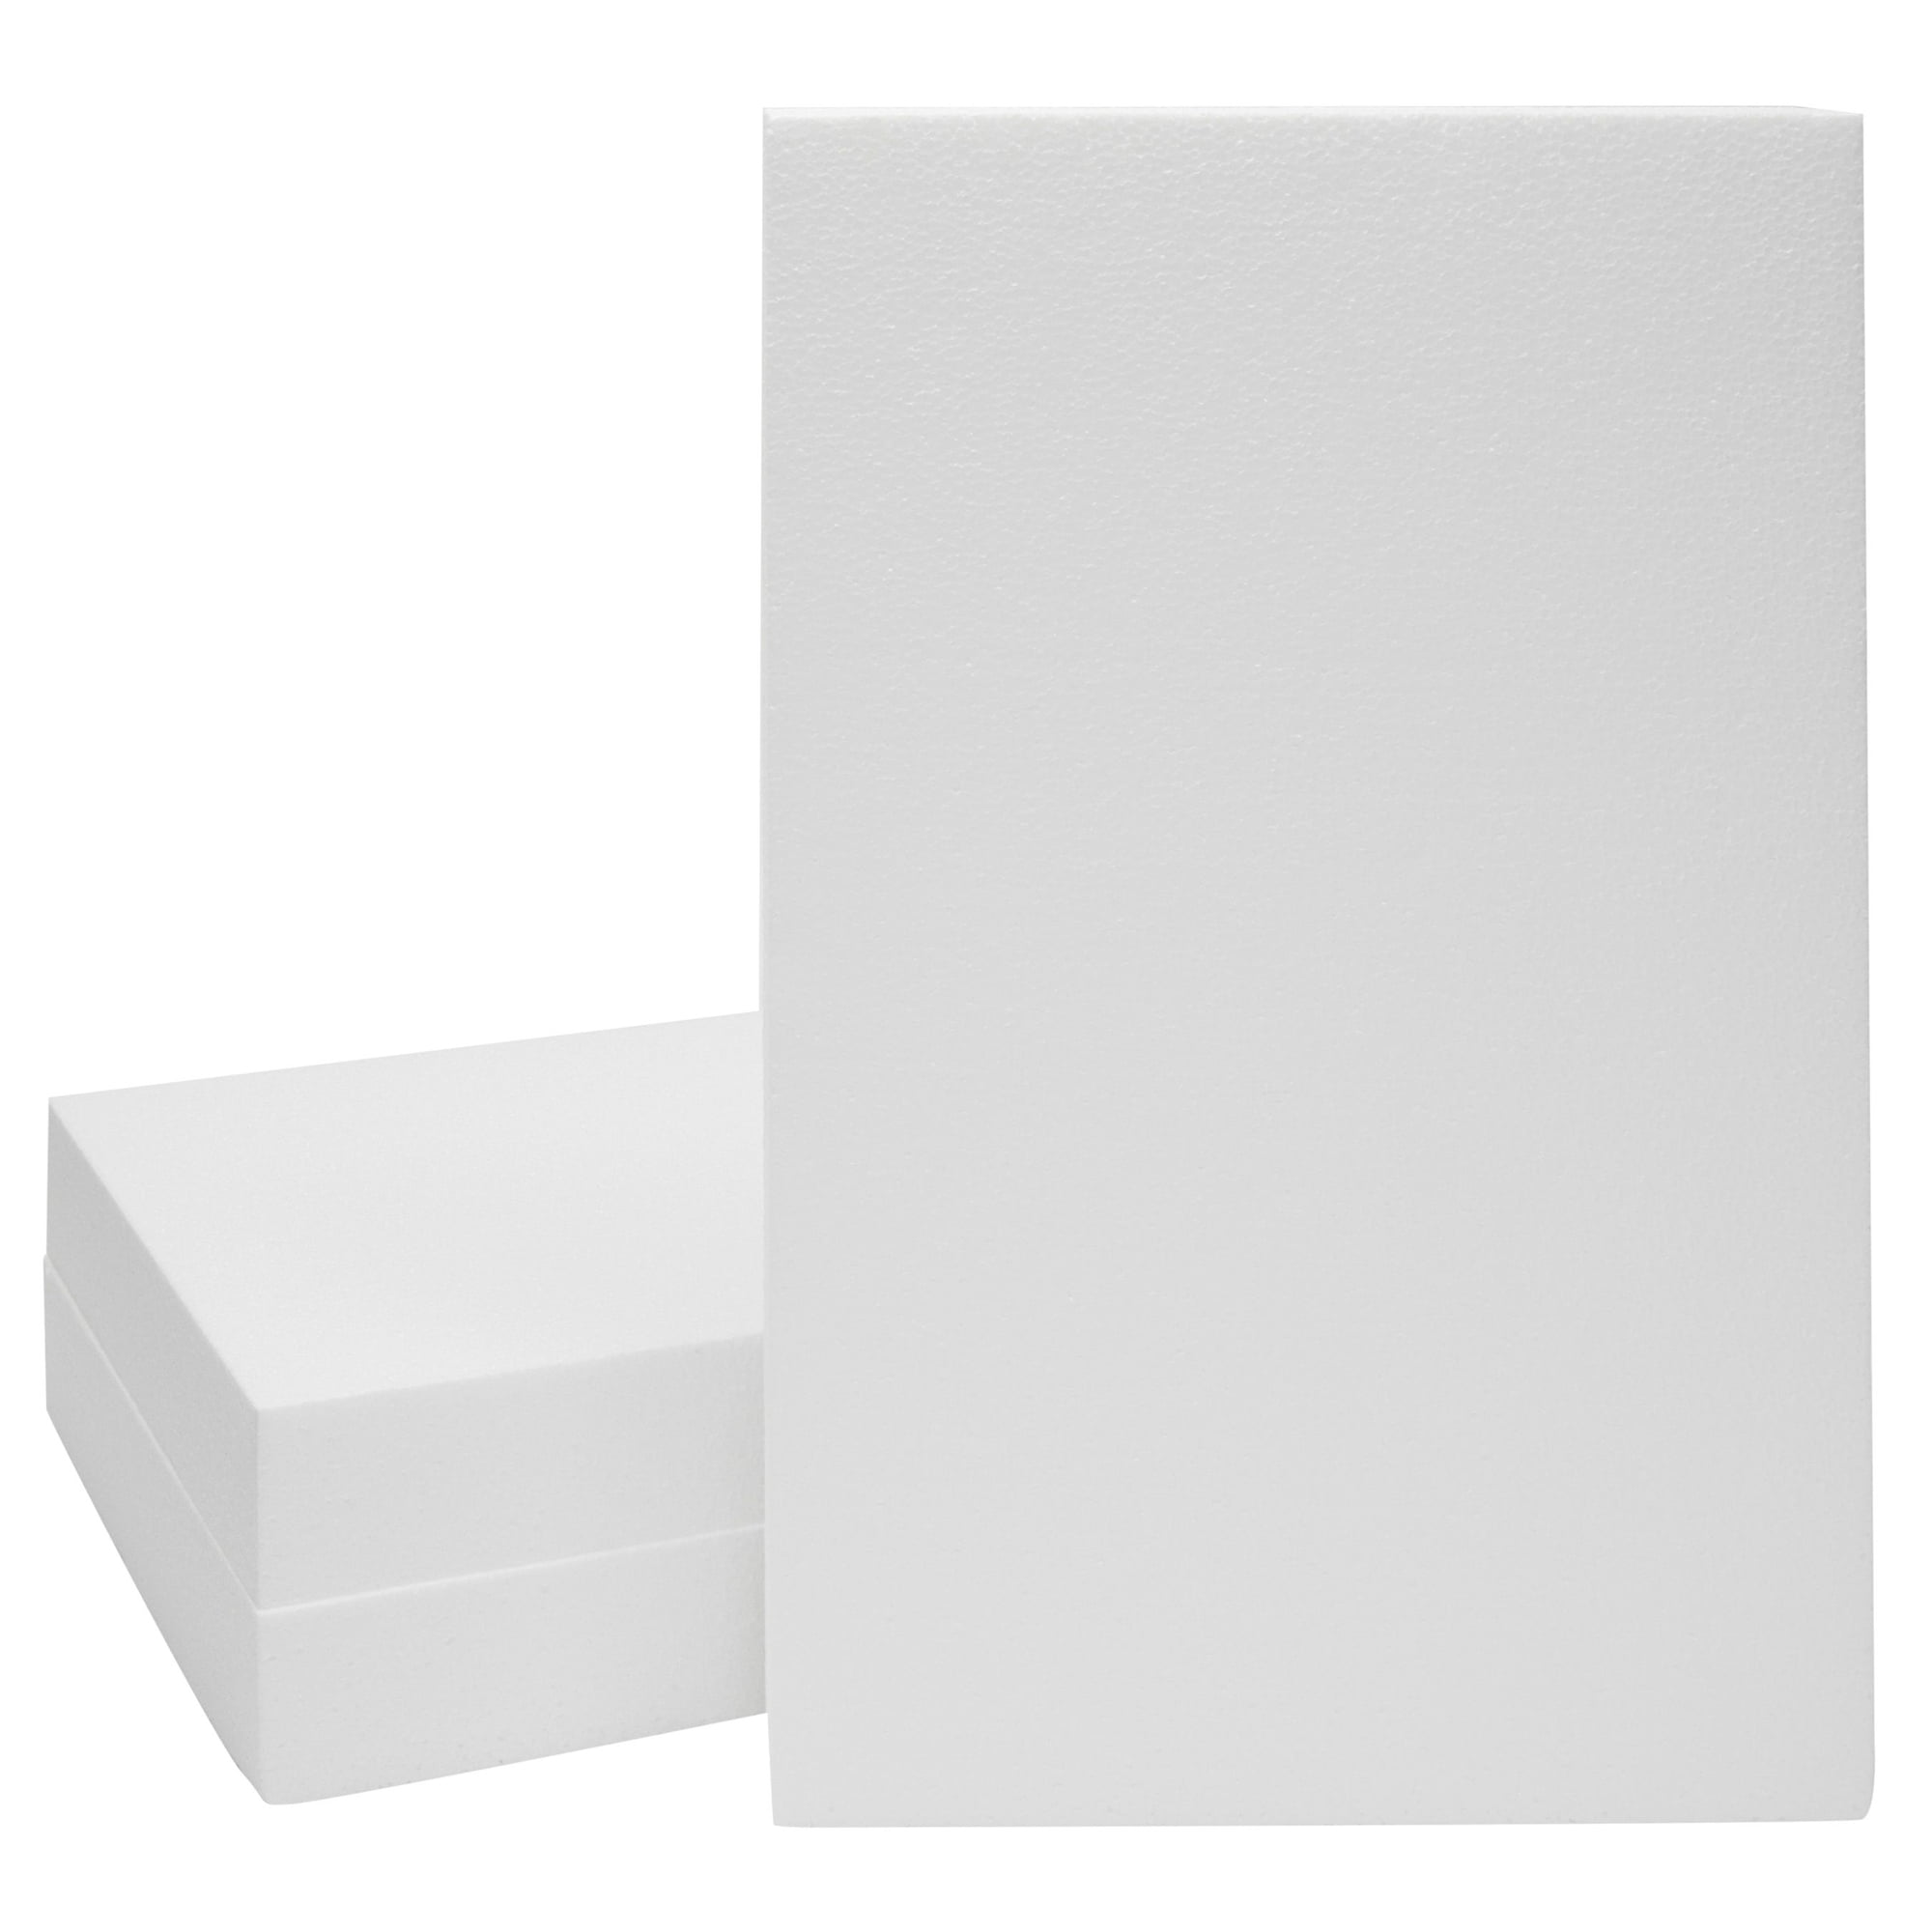 Styrofoam Block build Pt.2 : r/SaltLakeCity